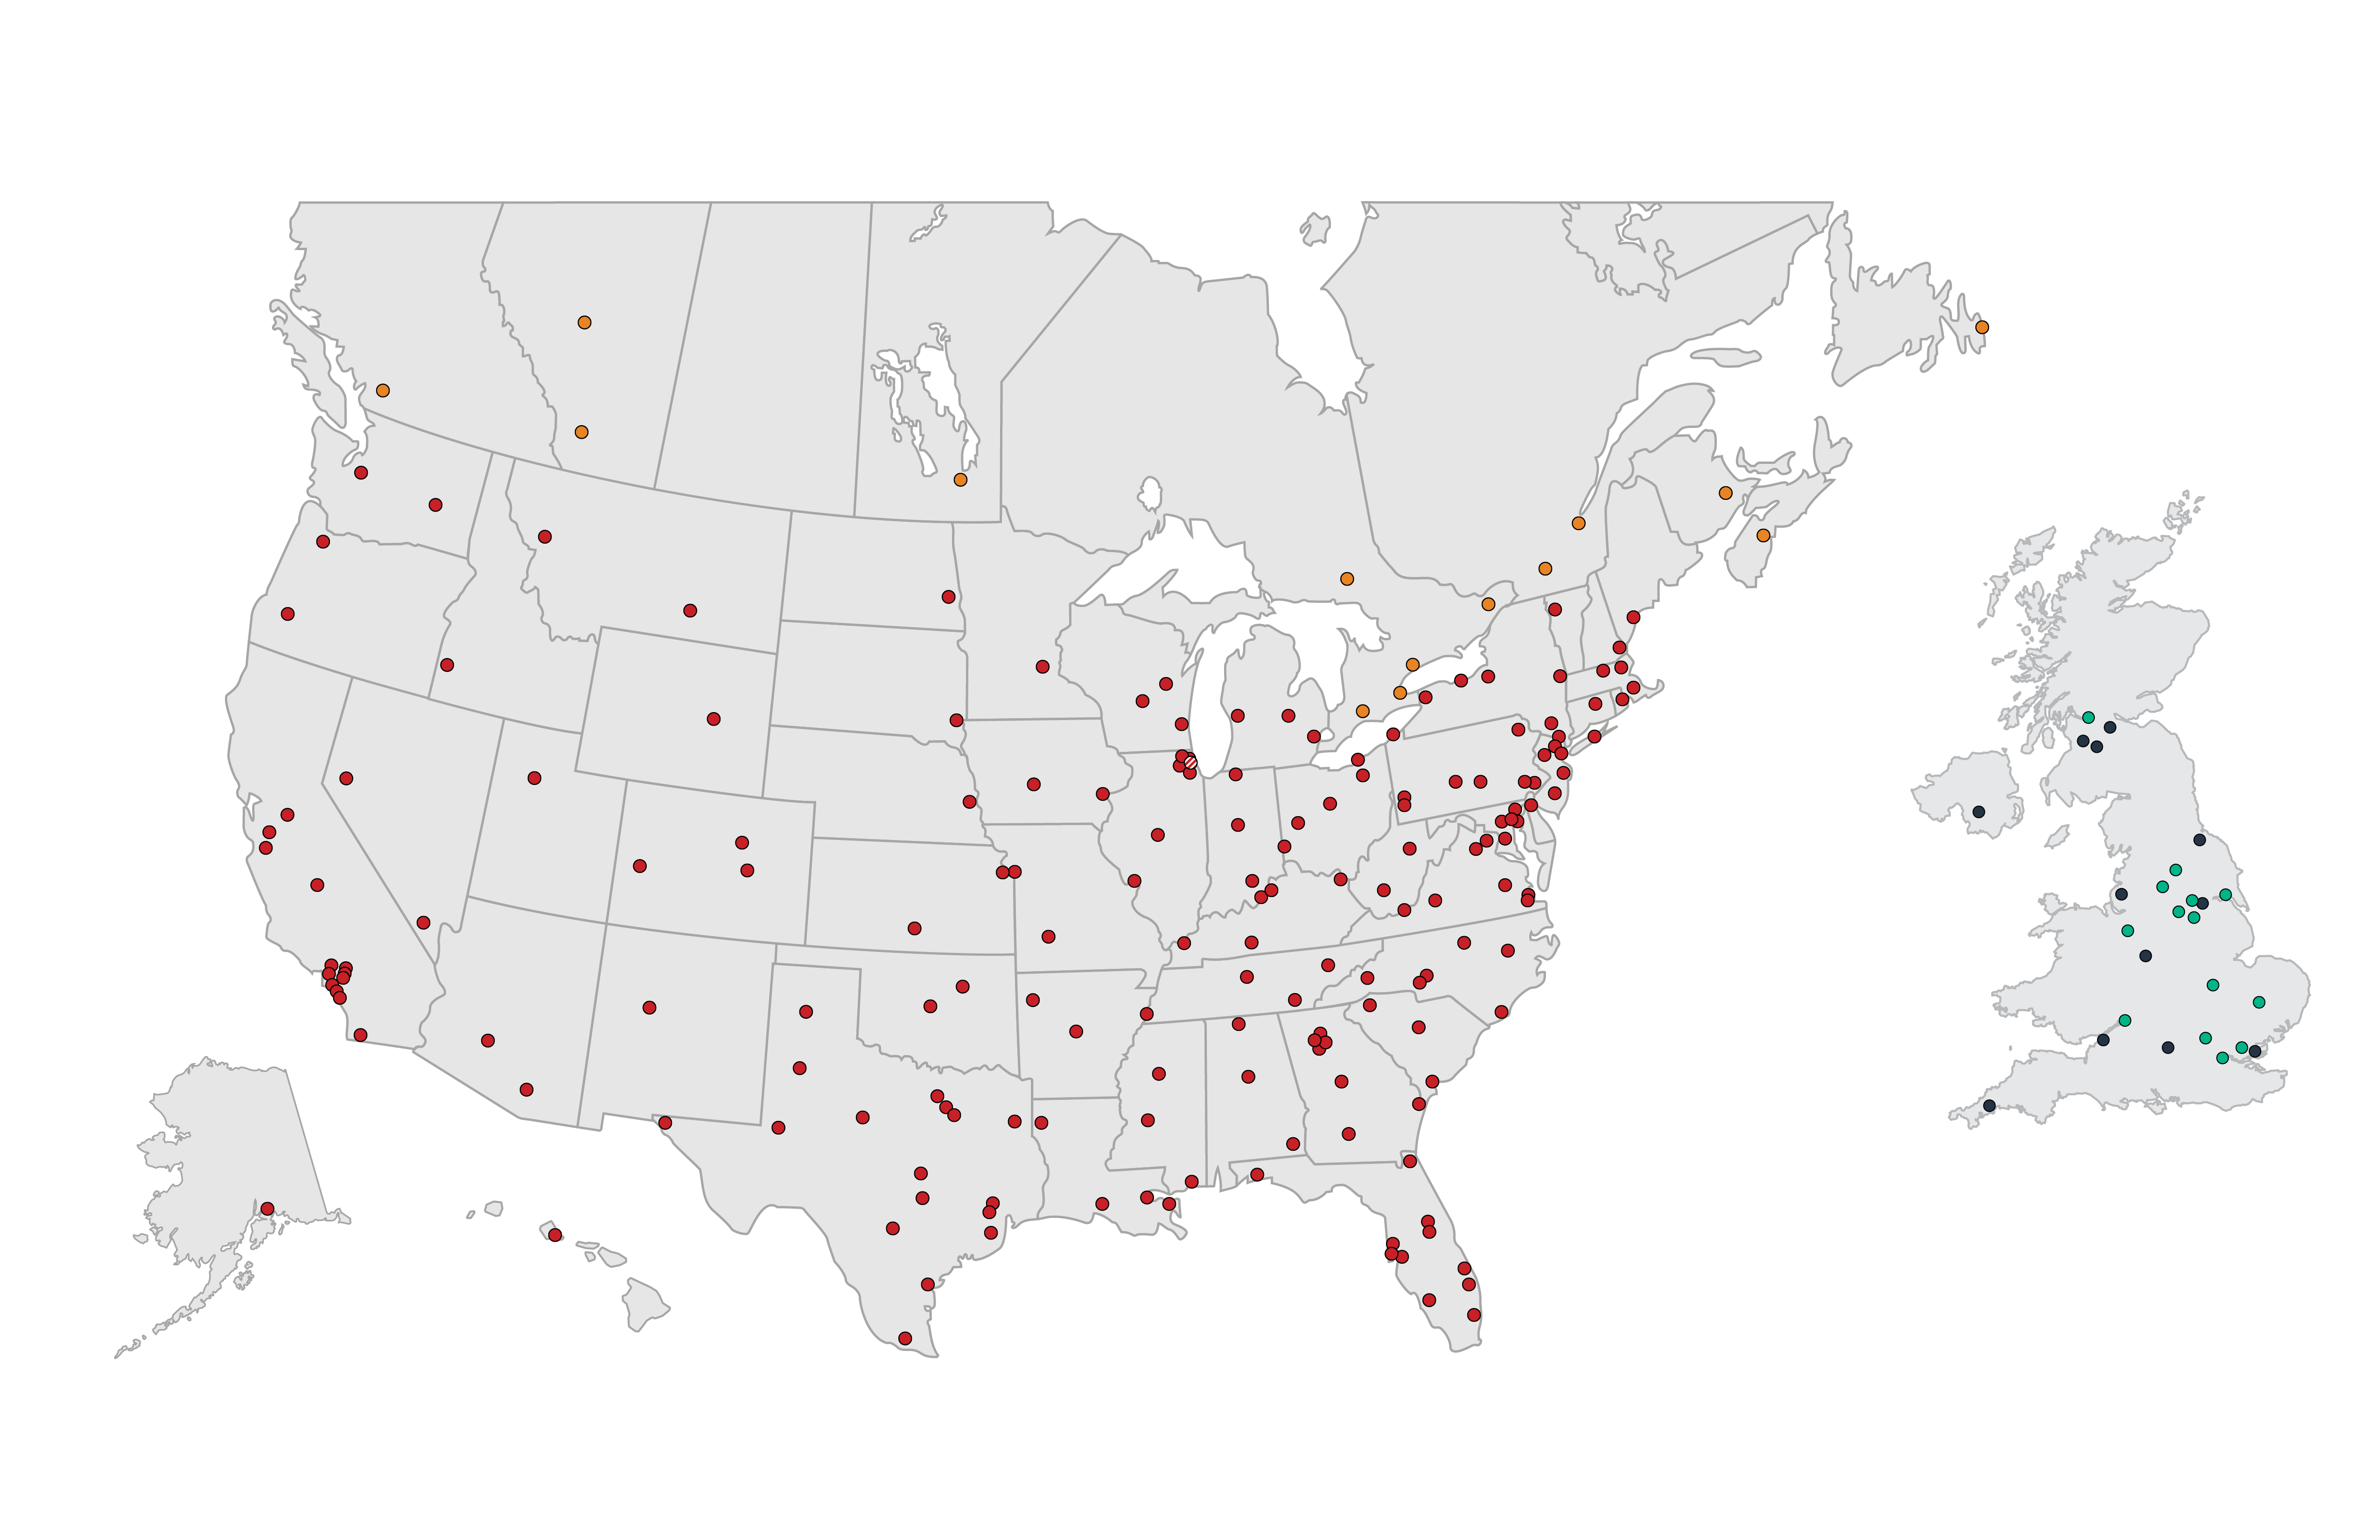 NorthAmericaUK locations